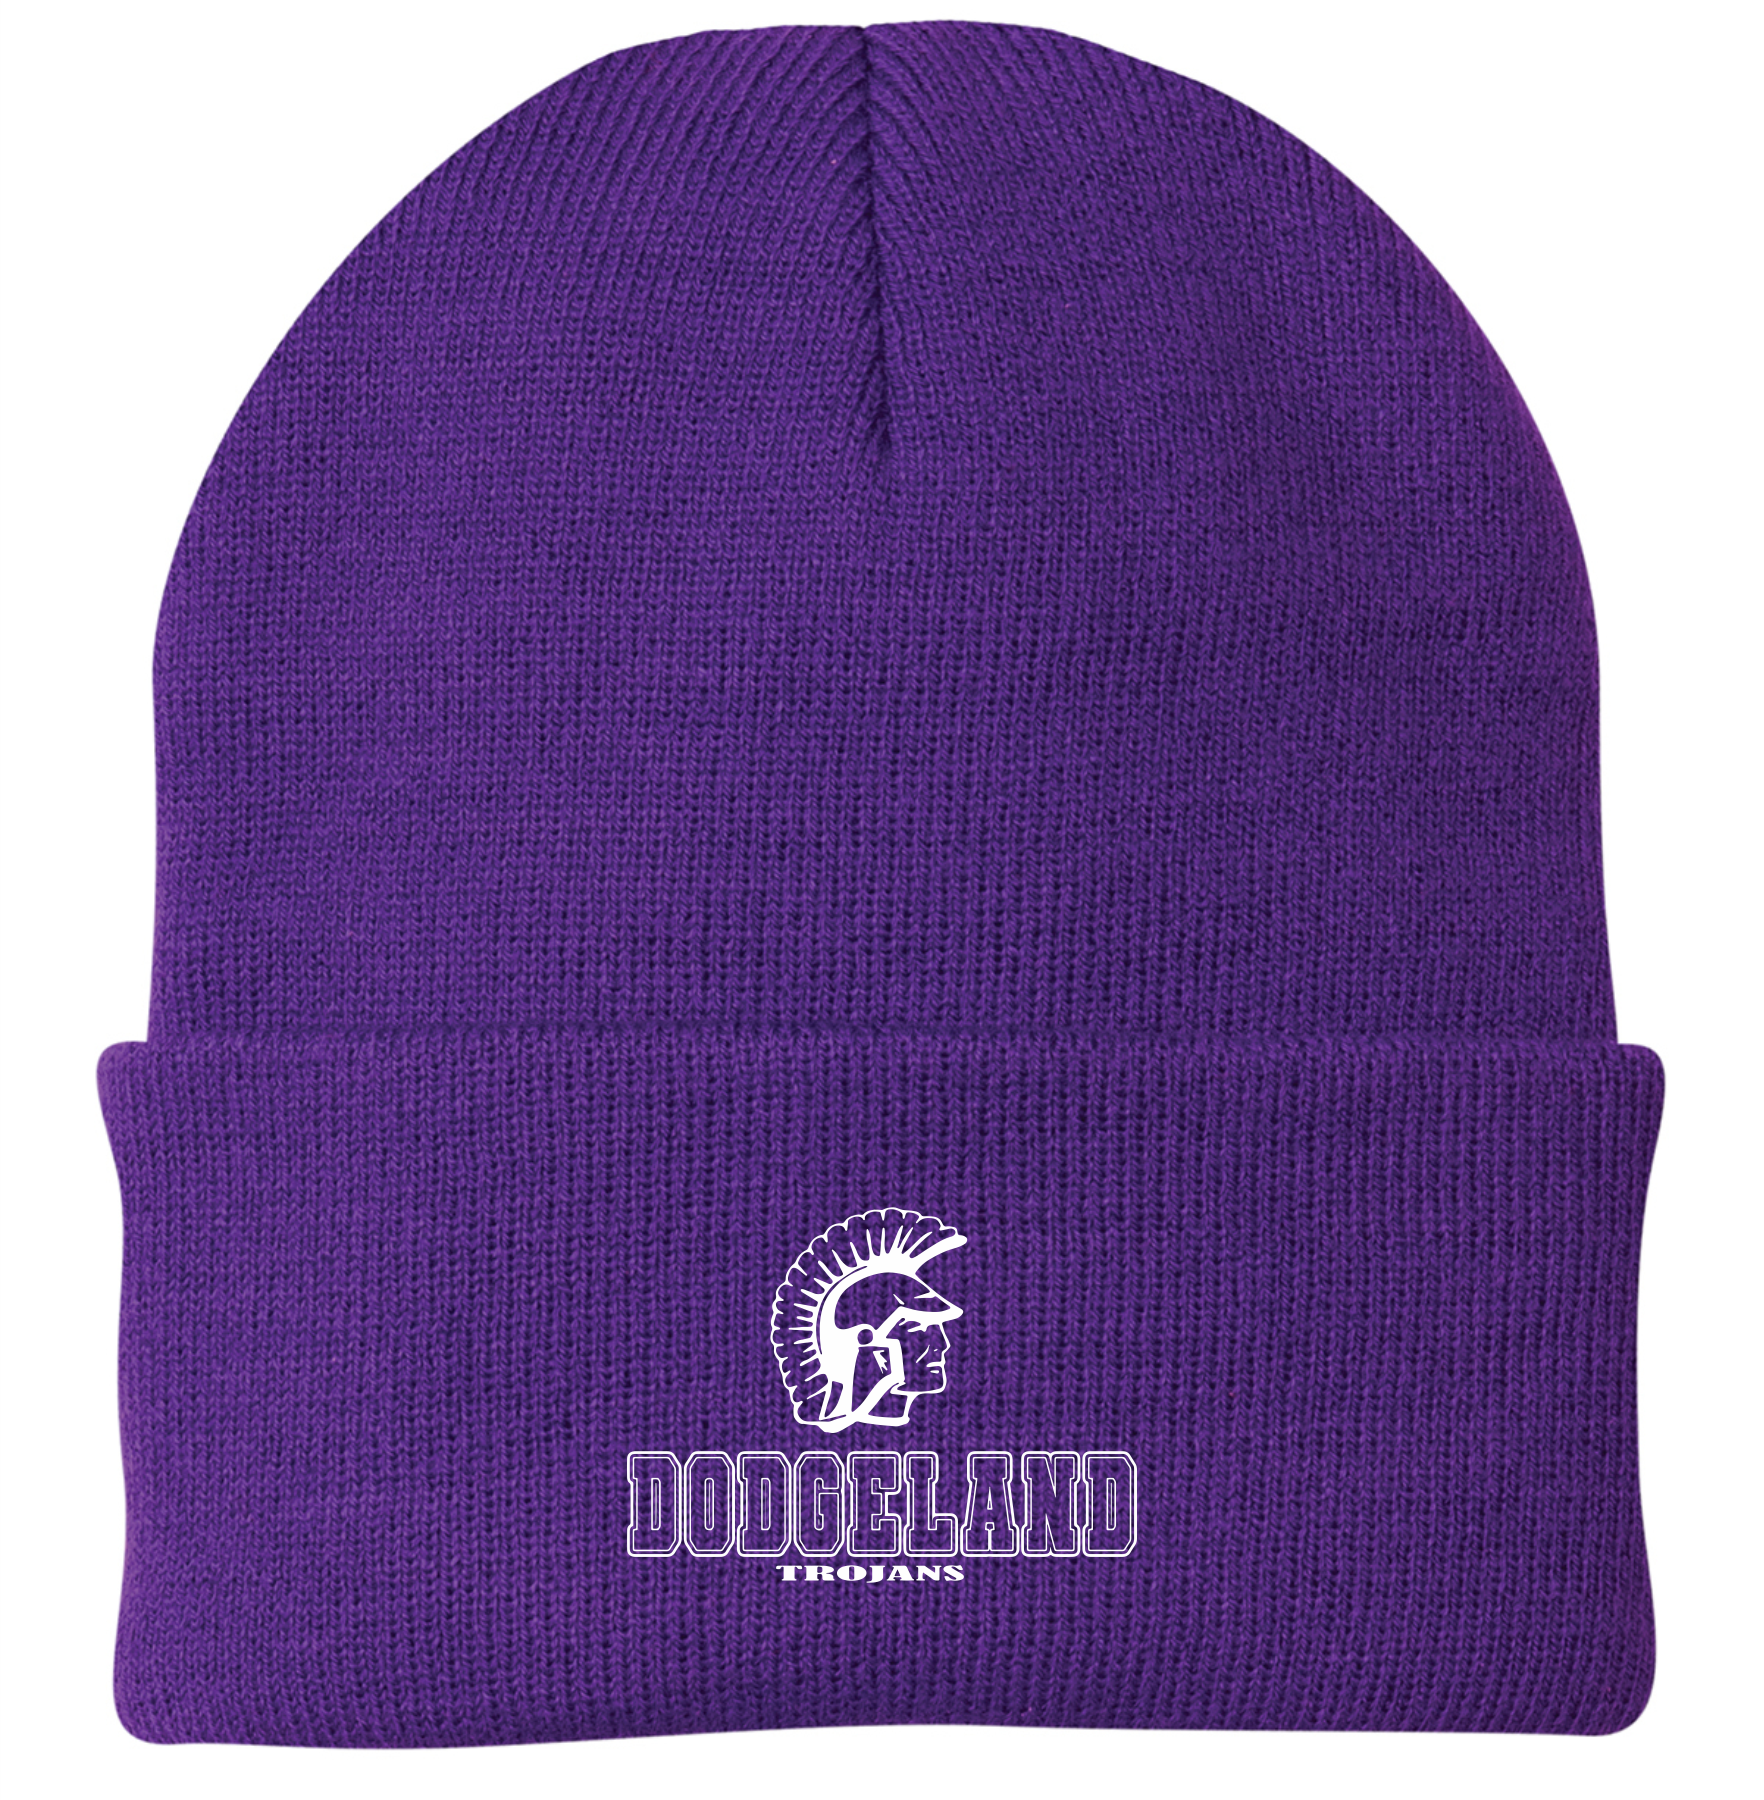 Dodgeland Port & Company® - Knit Cap